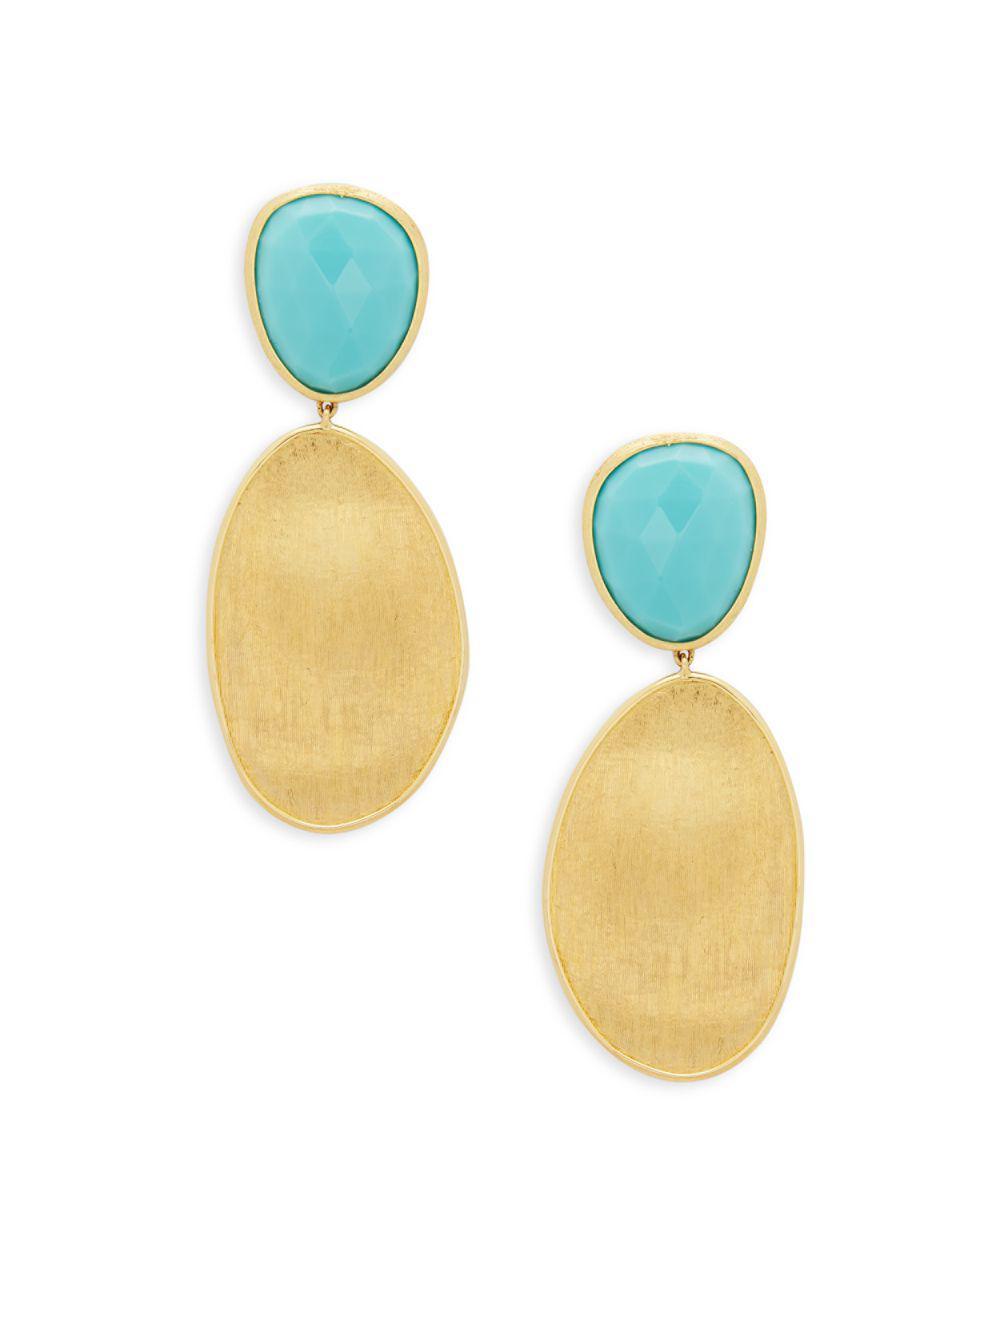 Lyst - Marco Bicego 18k Yellow Gold Turquoise Drop Earrings in Metallic